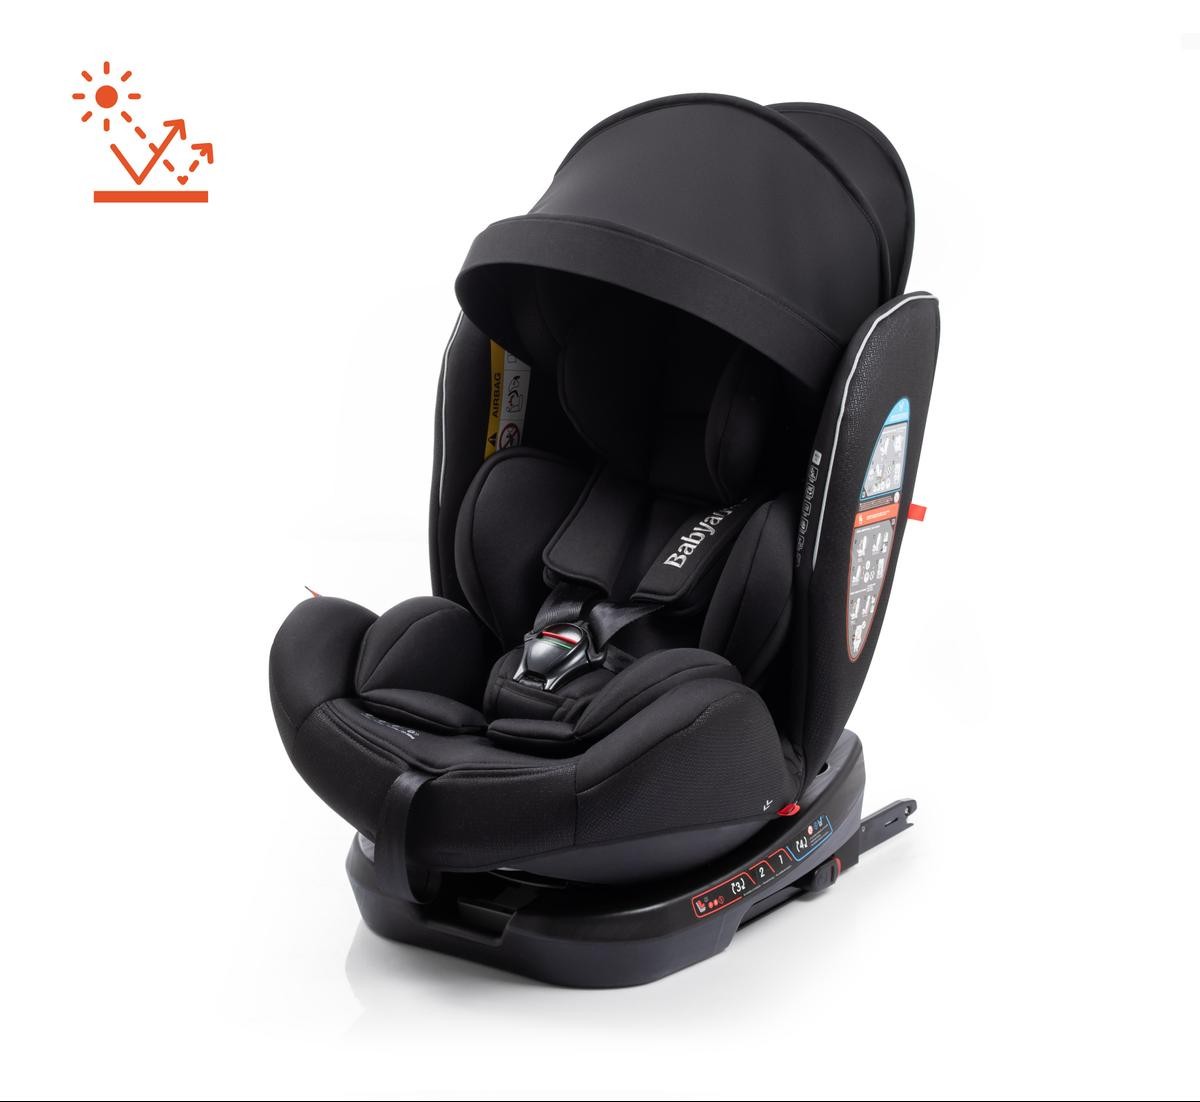 Babyauto 8435593701102 Kindersitz